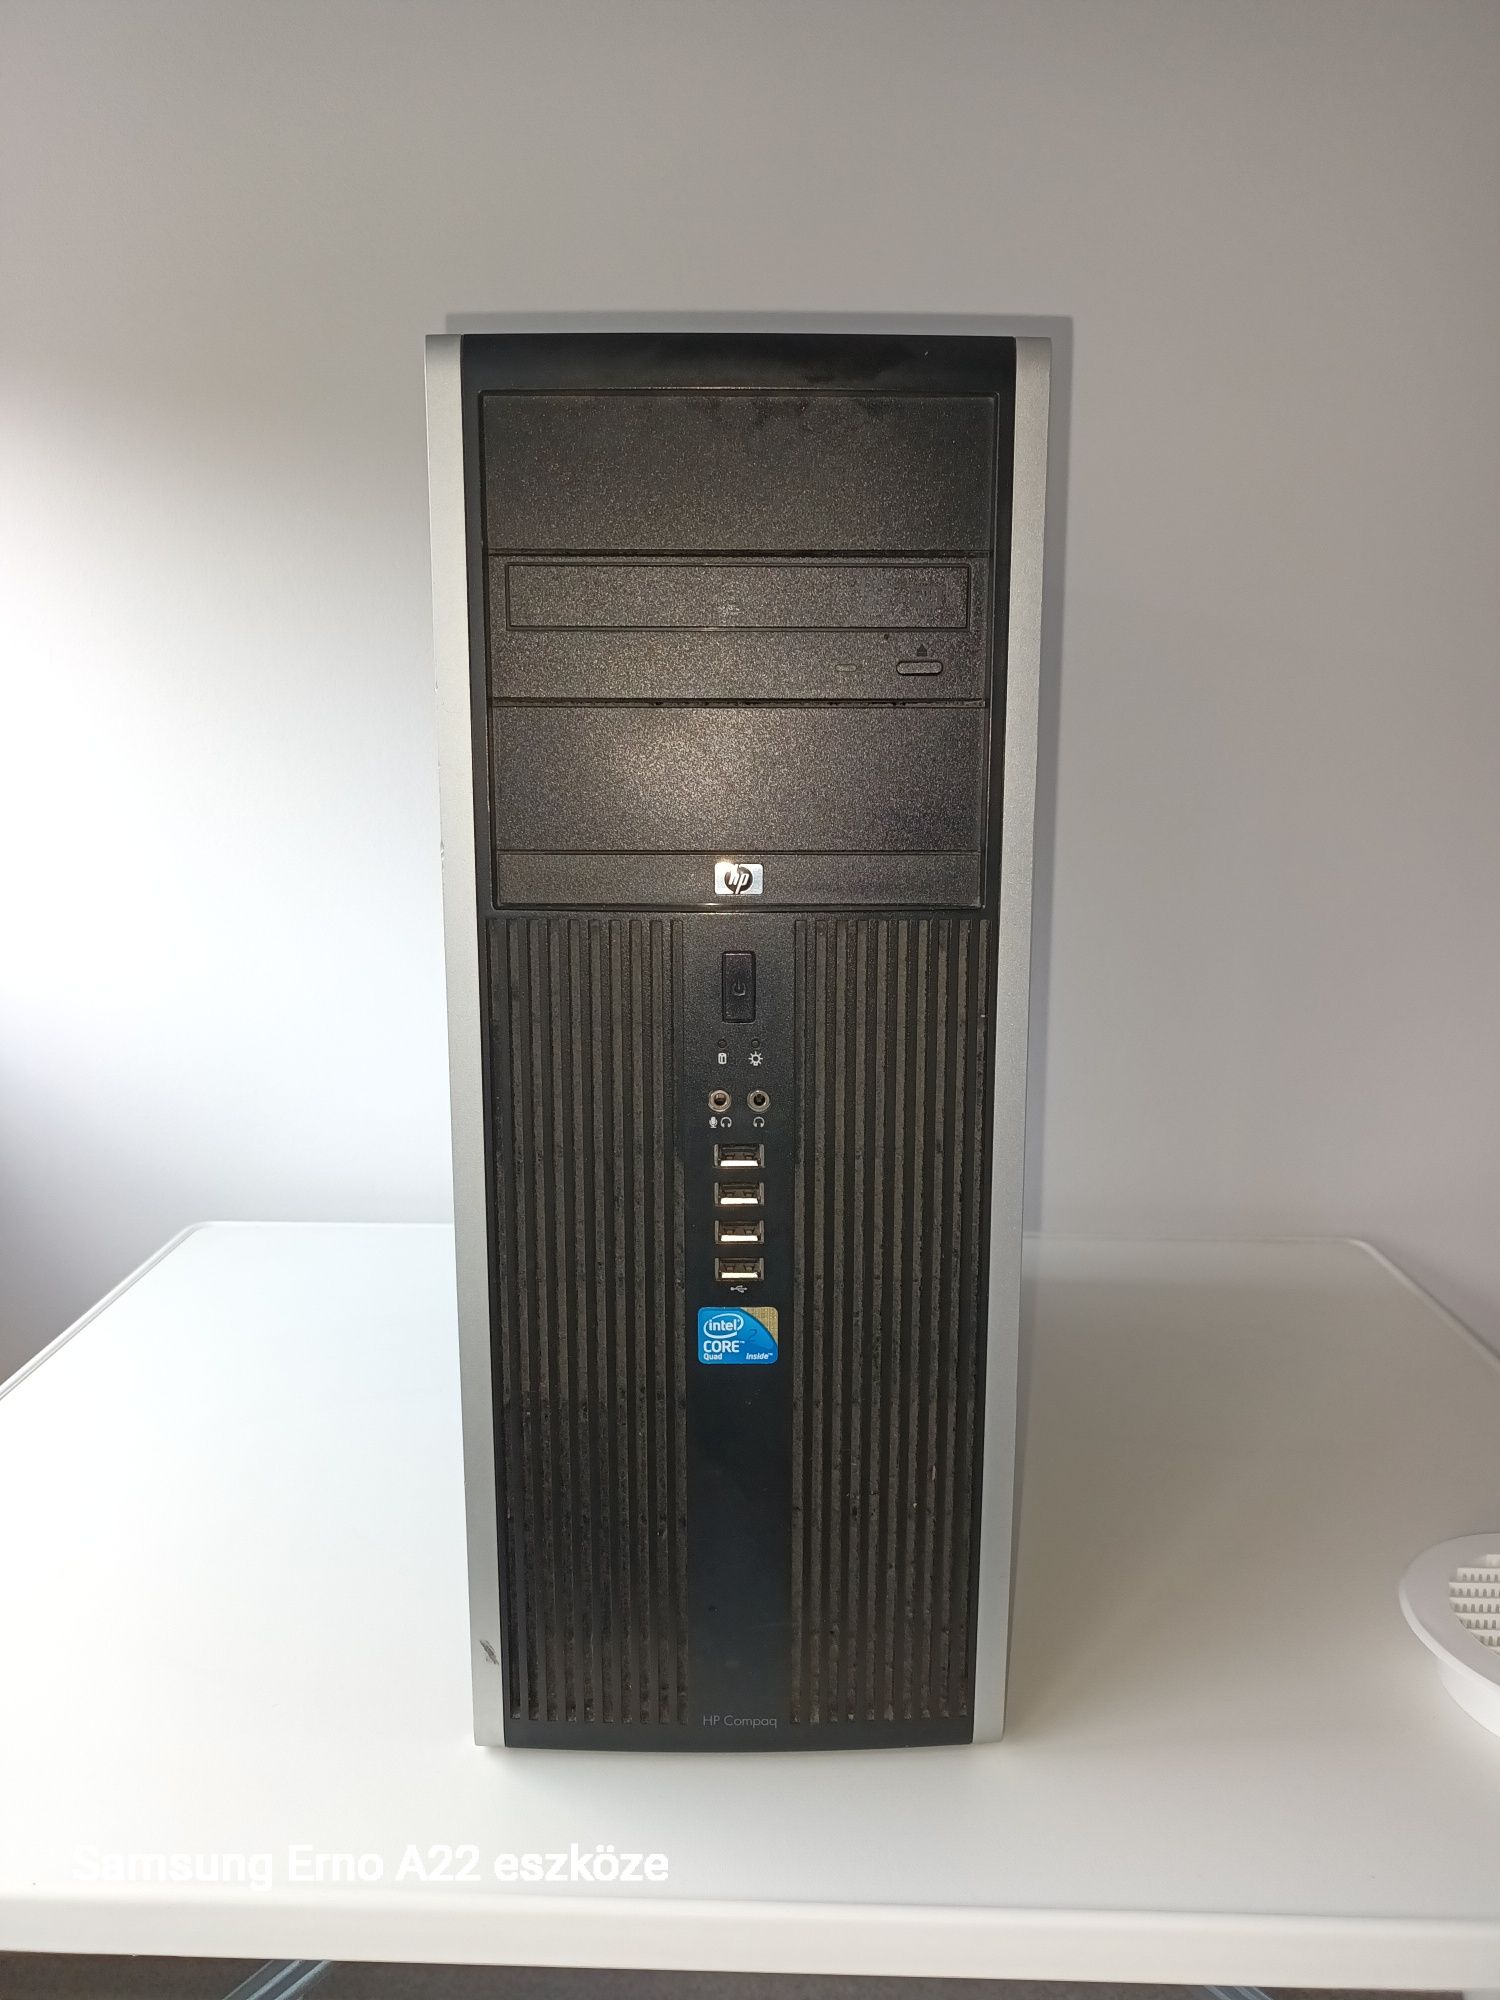 Computer Intel dual core